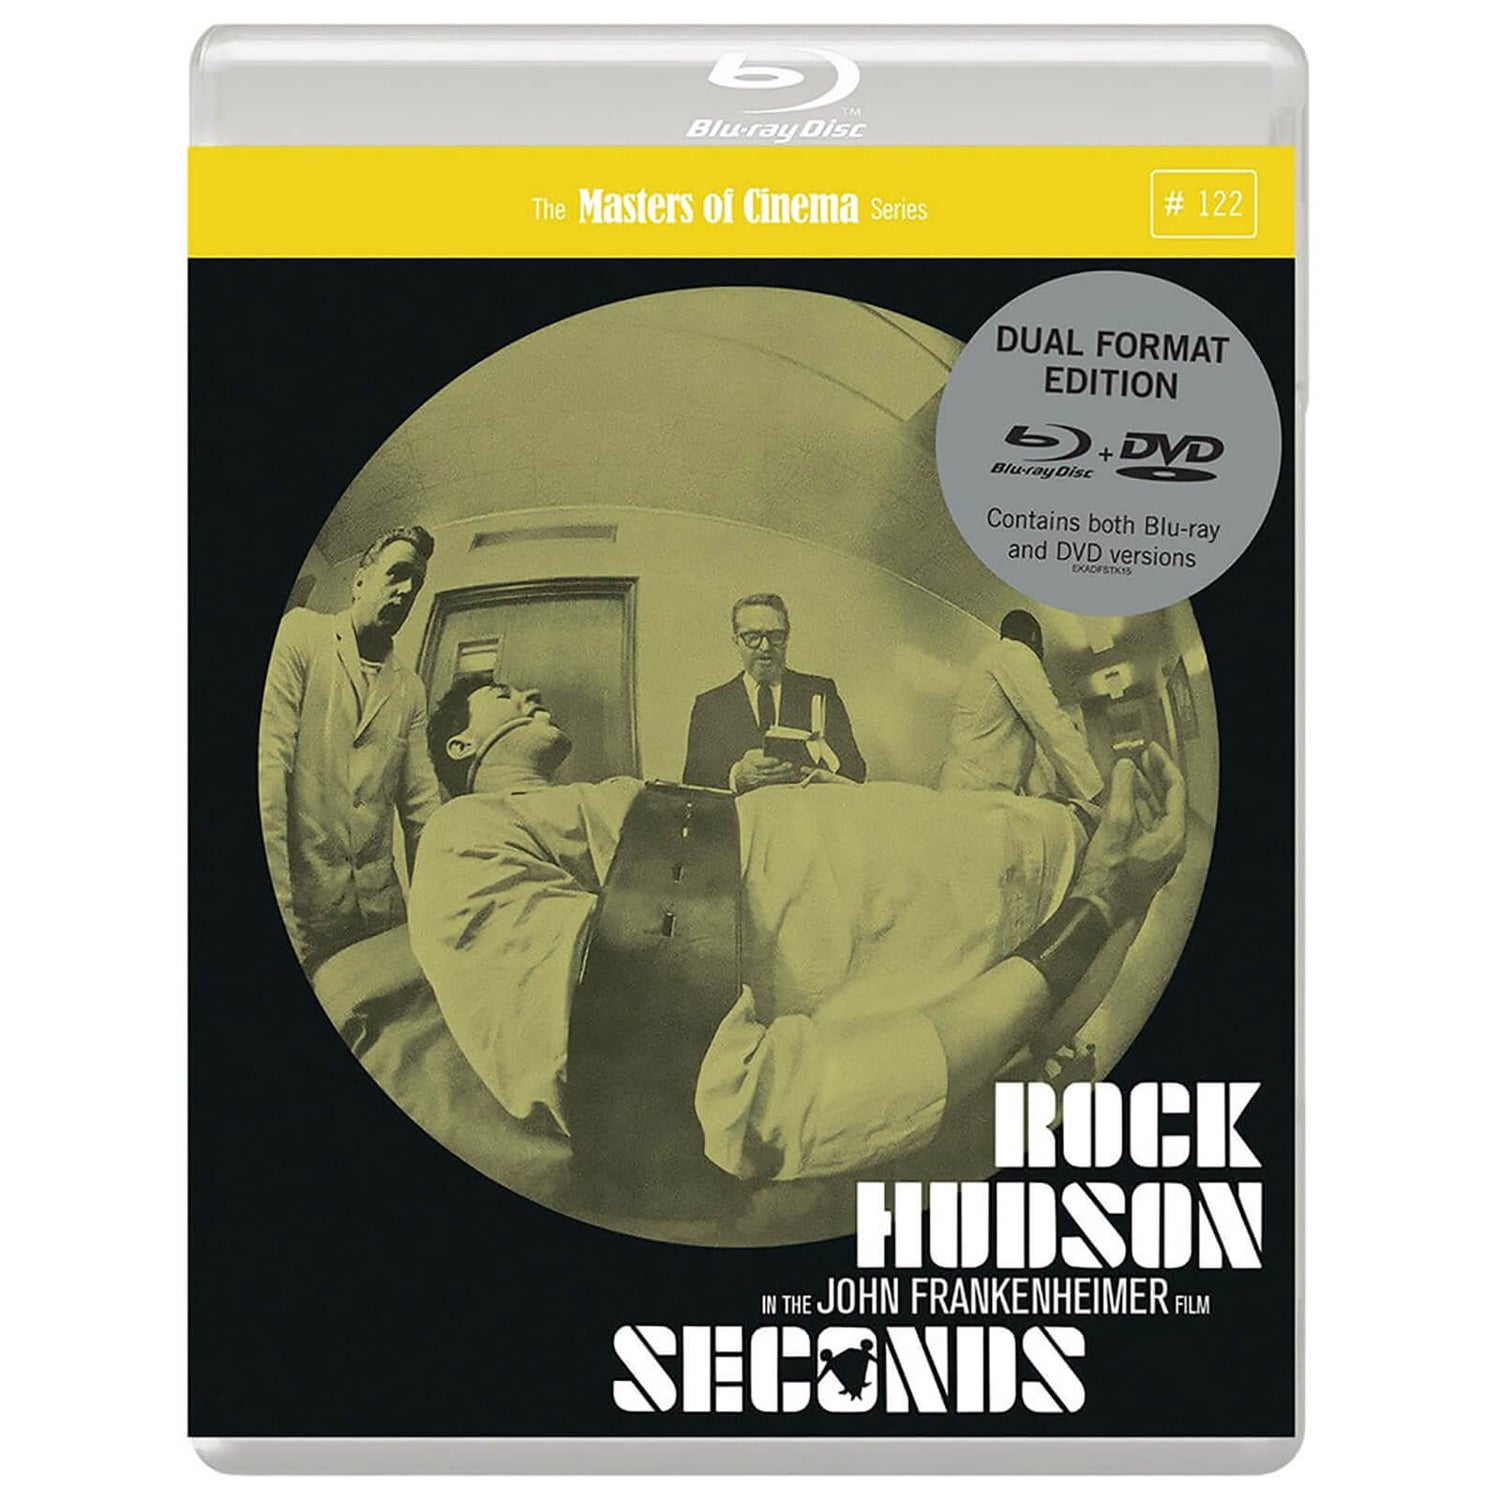 Seconds - Dual Format Editie (Inclusief DVD)